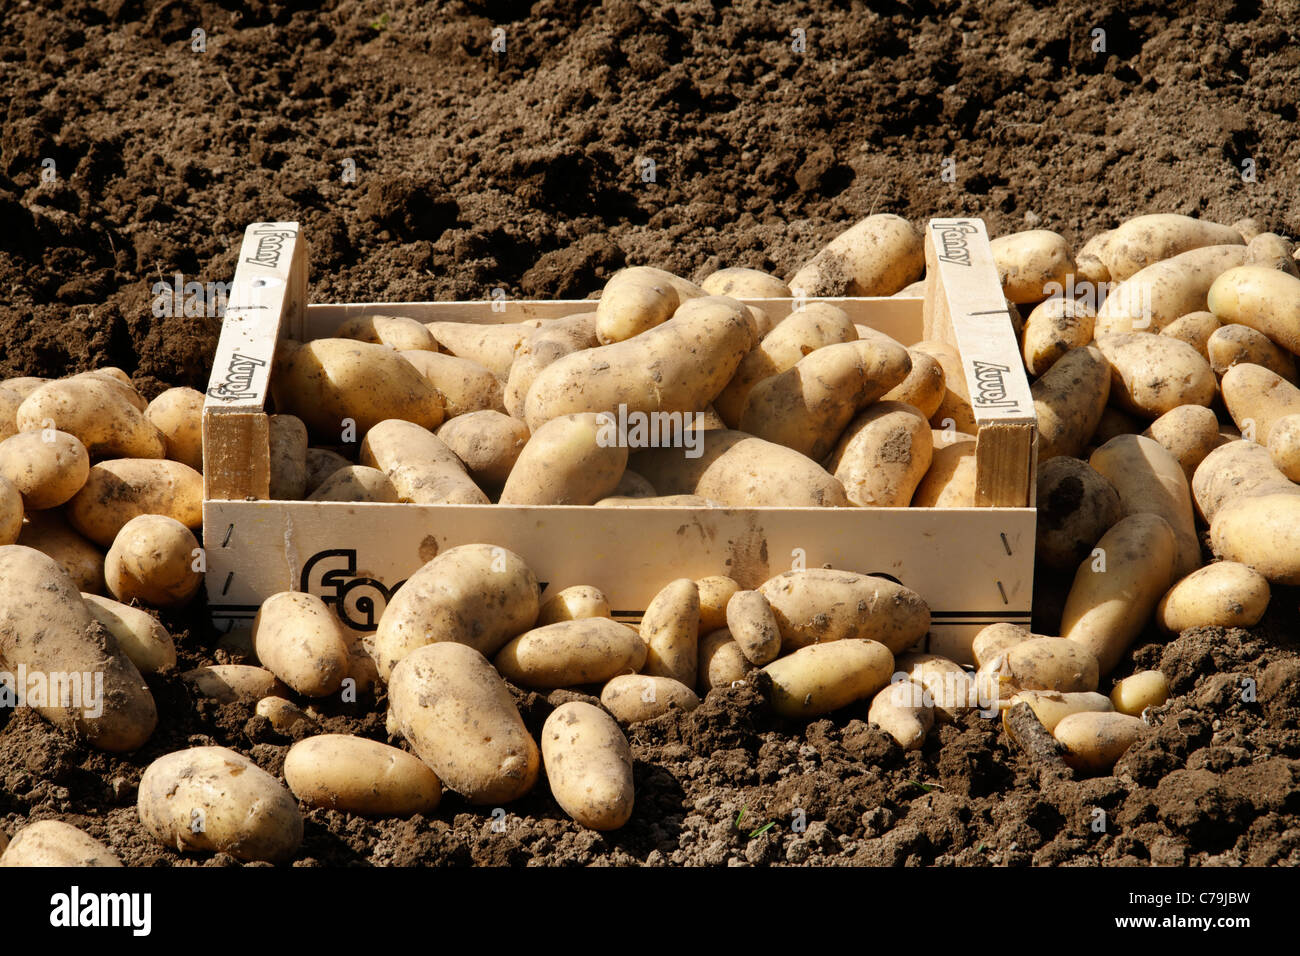 Harvesting potatoes (Solanum tuberosum) in a crate. Stock Photo